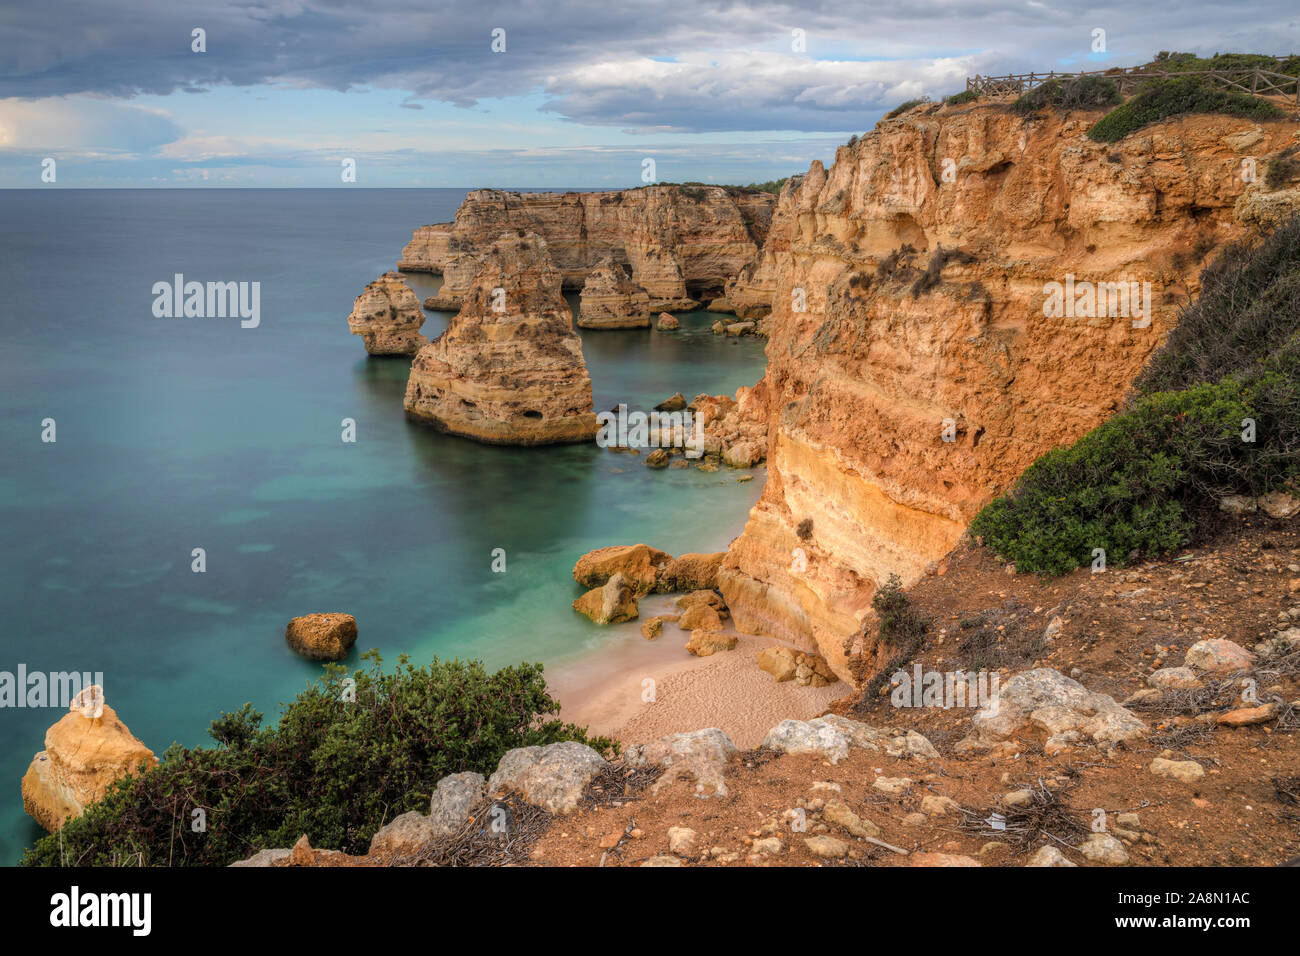 Praia da Marinha, Lagoa, Algarve, Portugal, Europe Stock Photo